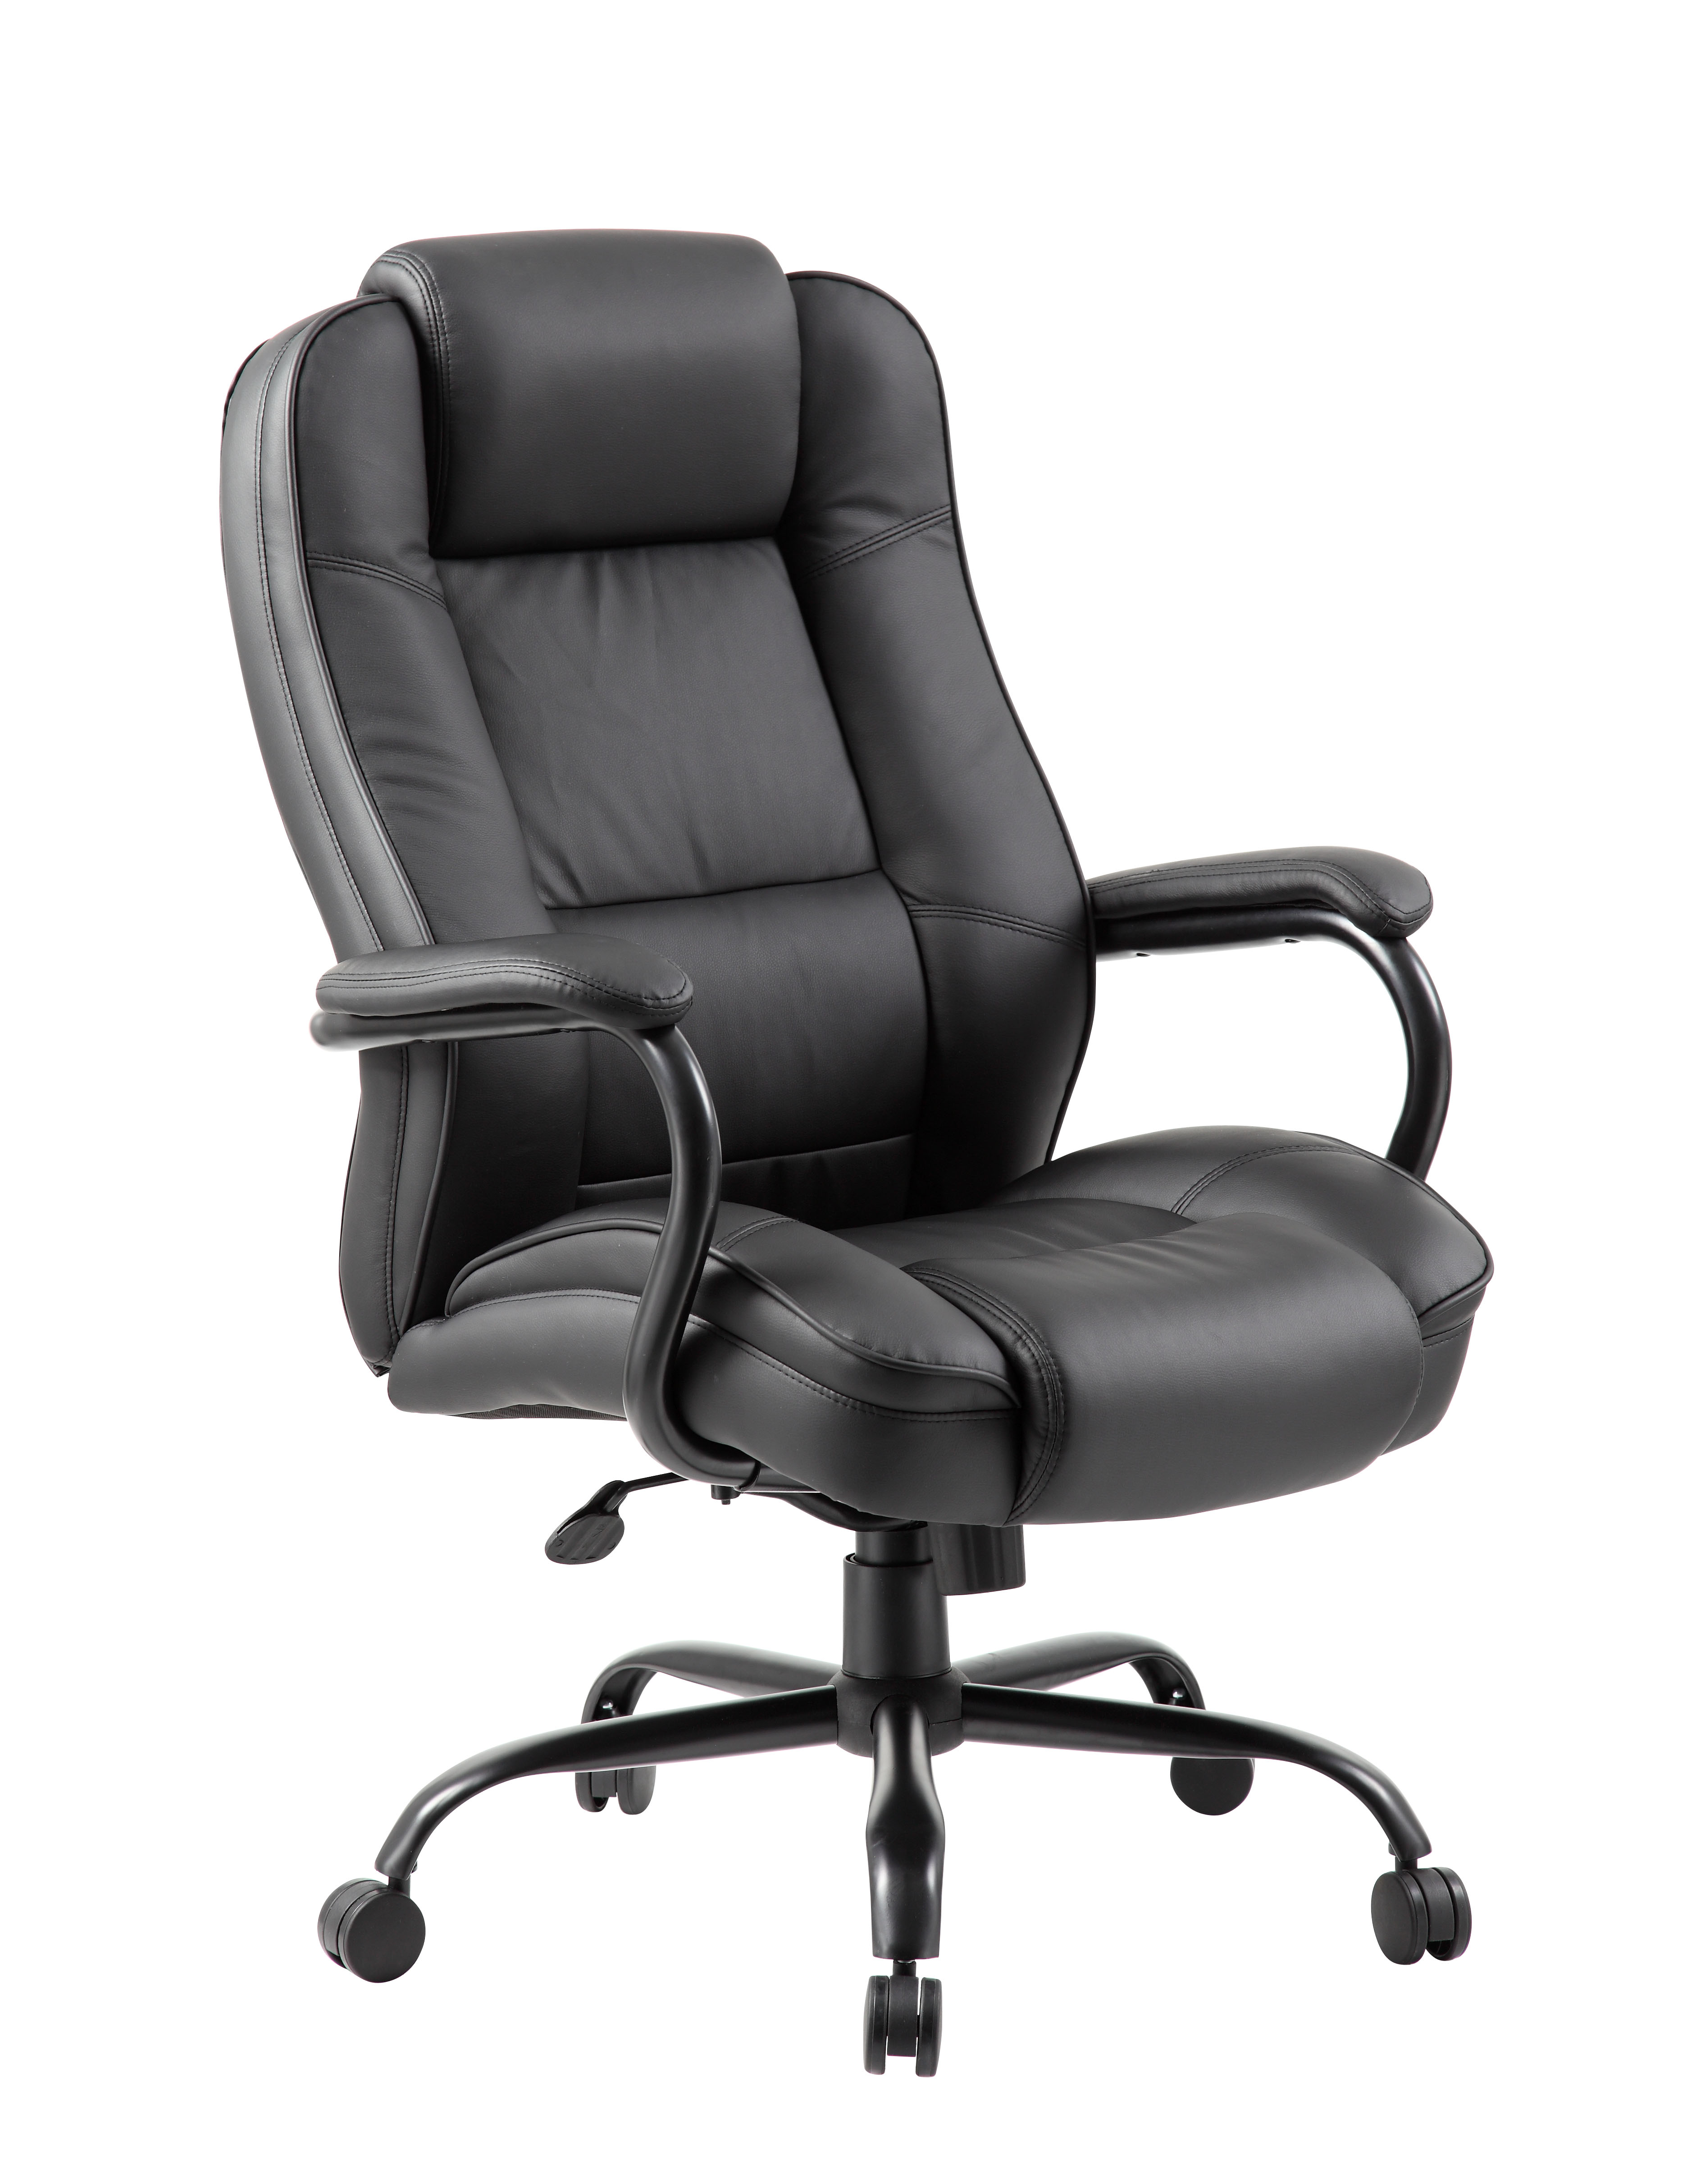 B992-bk Heavy Duty Executive Chair - Black